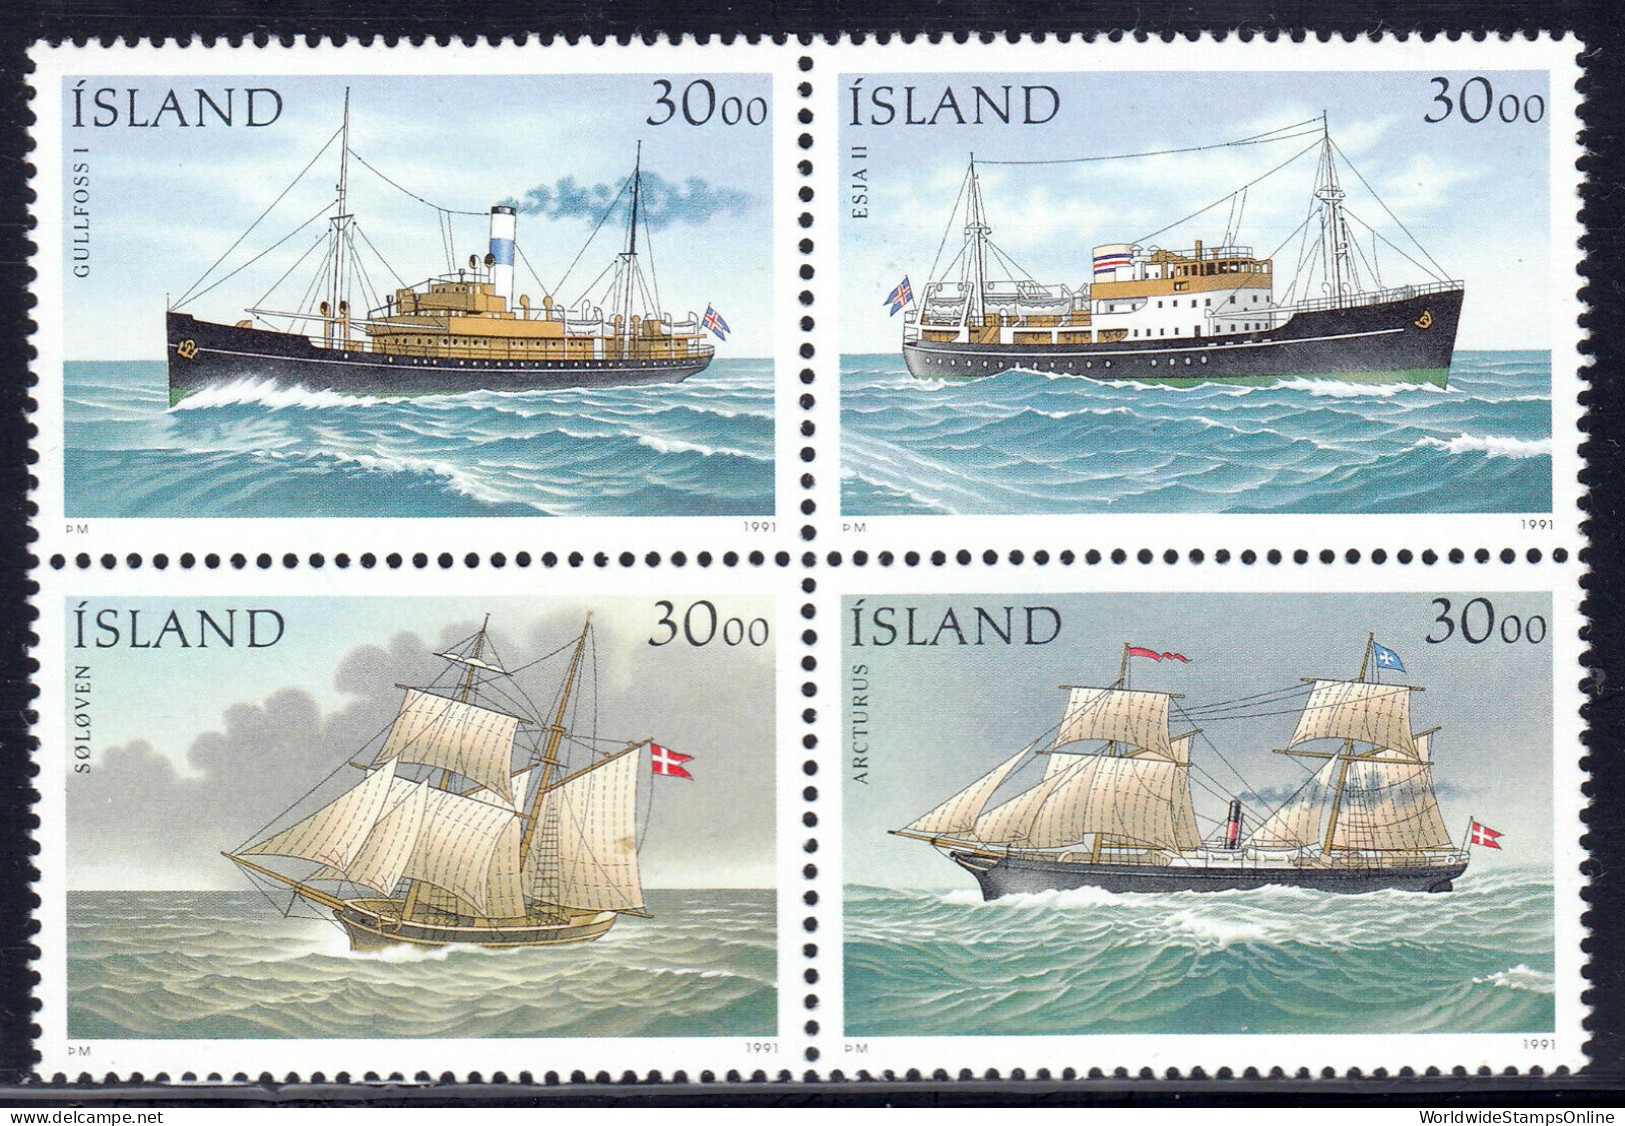 ICELAND — SCOTT 745 — 1991 SHIPS SE-TENANT SET — MNH — SCV $20 - Briefe U. Dokumente